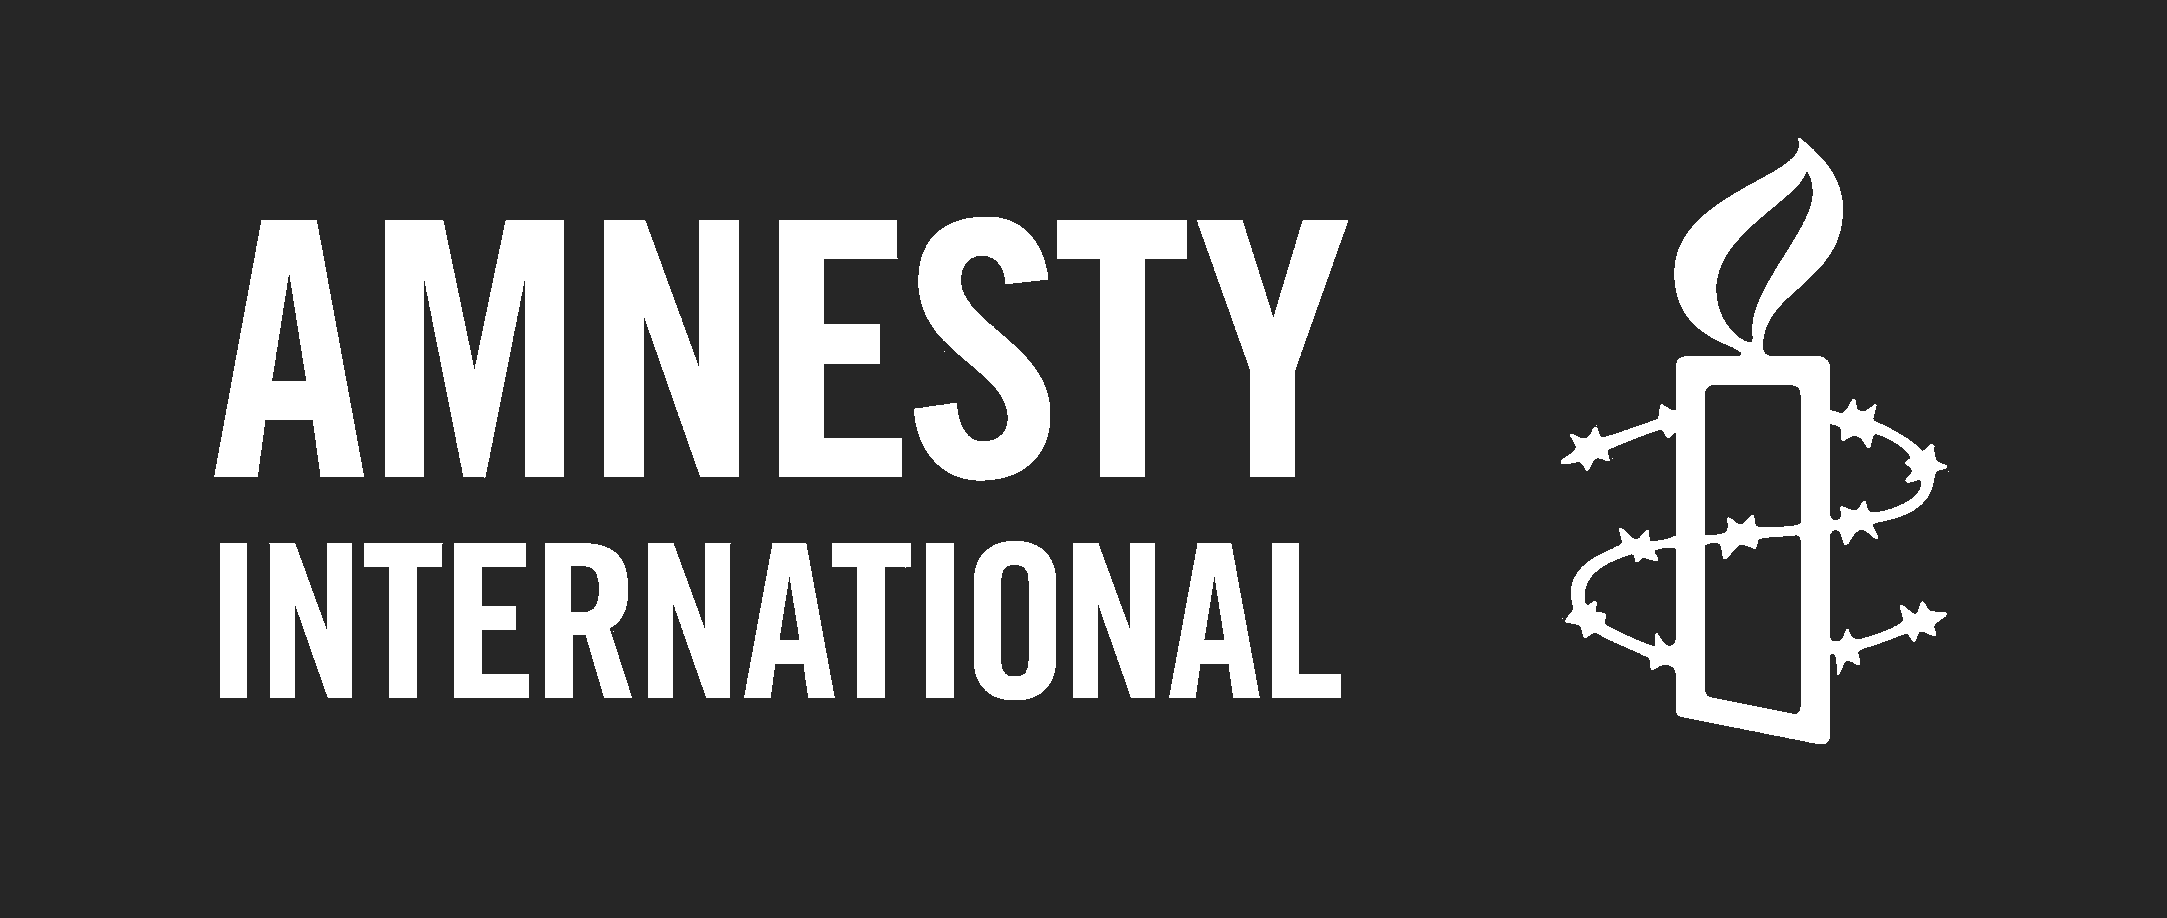 amnesty-international-logo-262626.png